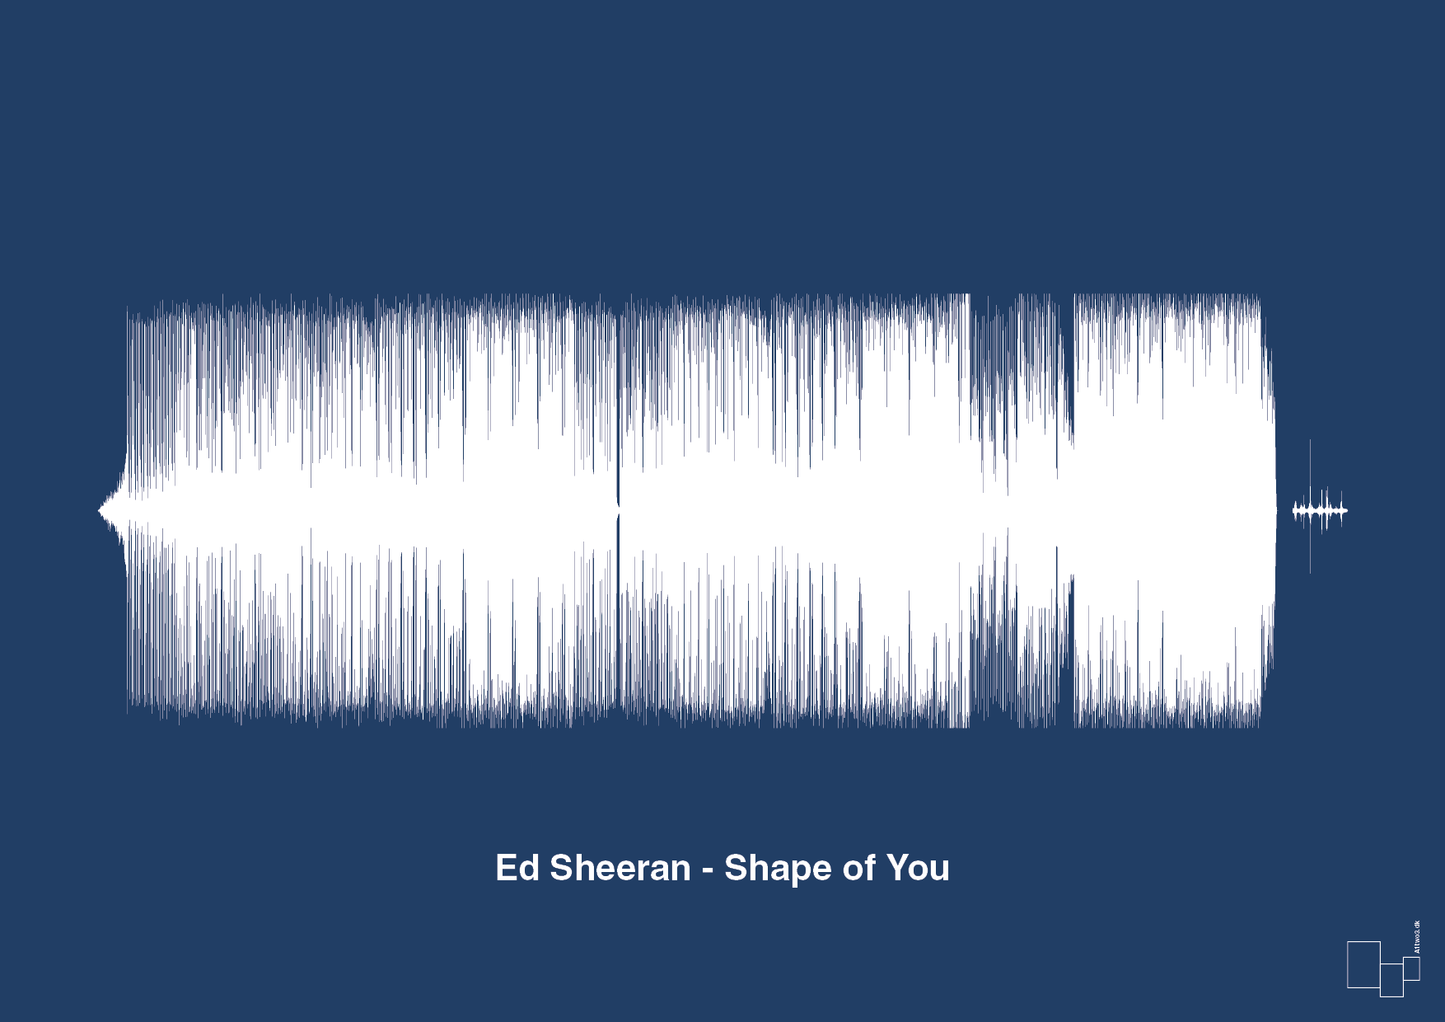 ed sheeran - shape of you - Plakat med Musik i Lapis Blue